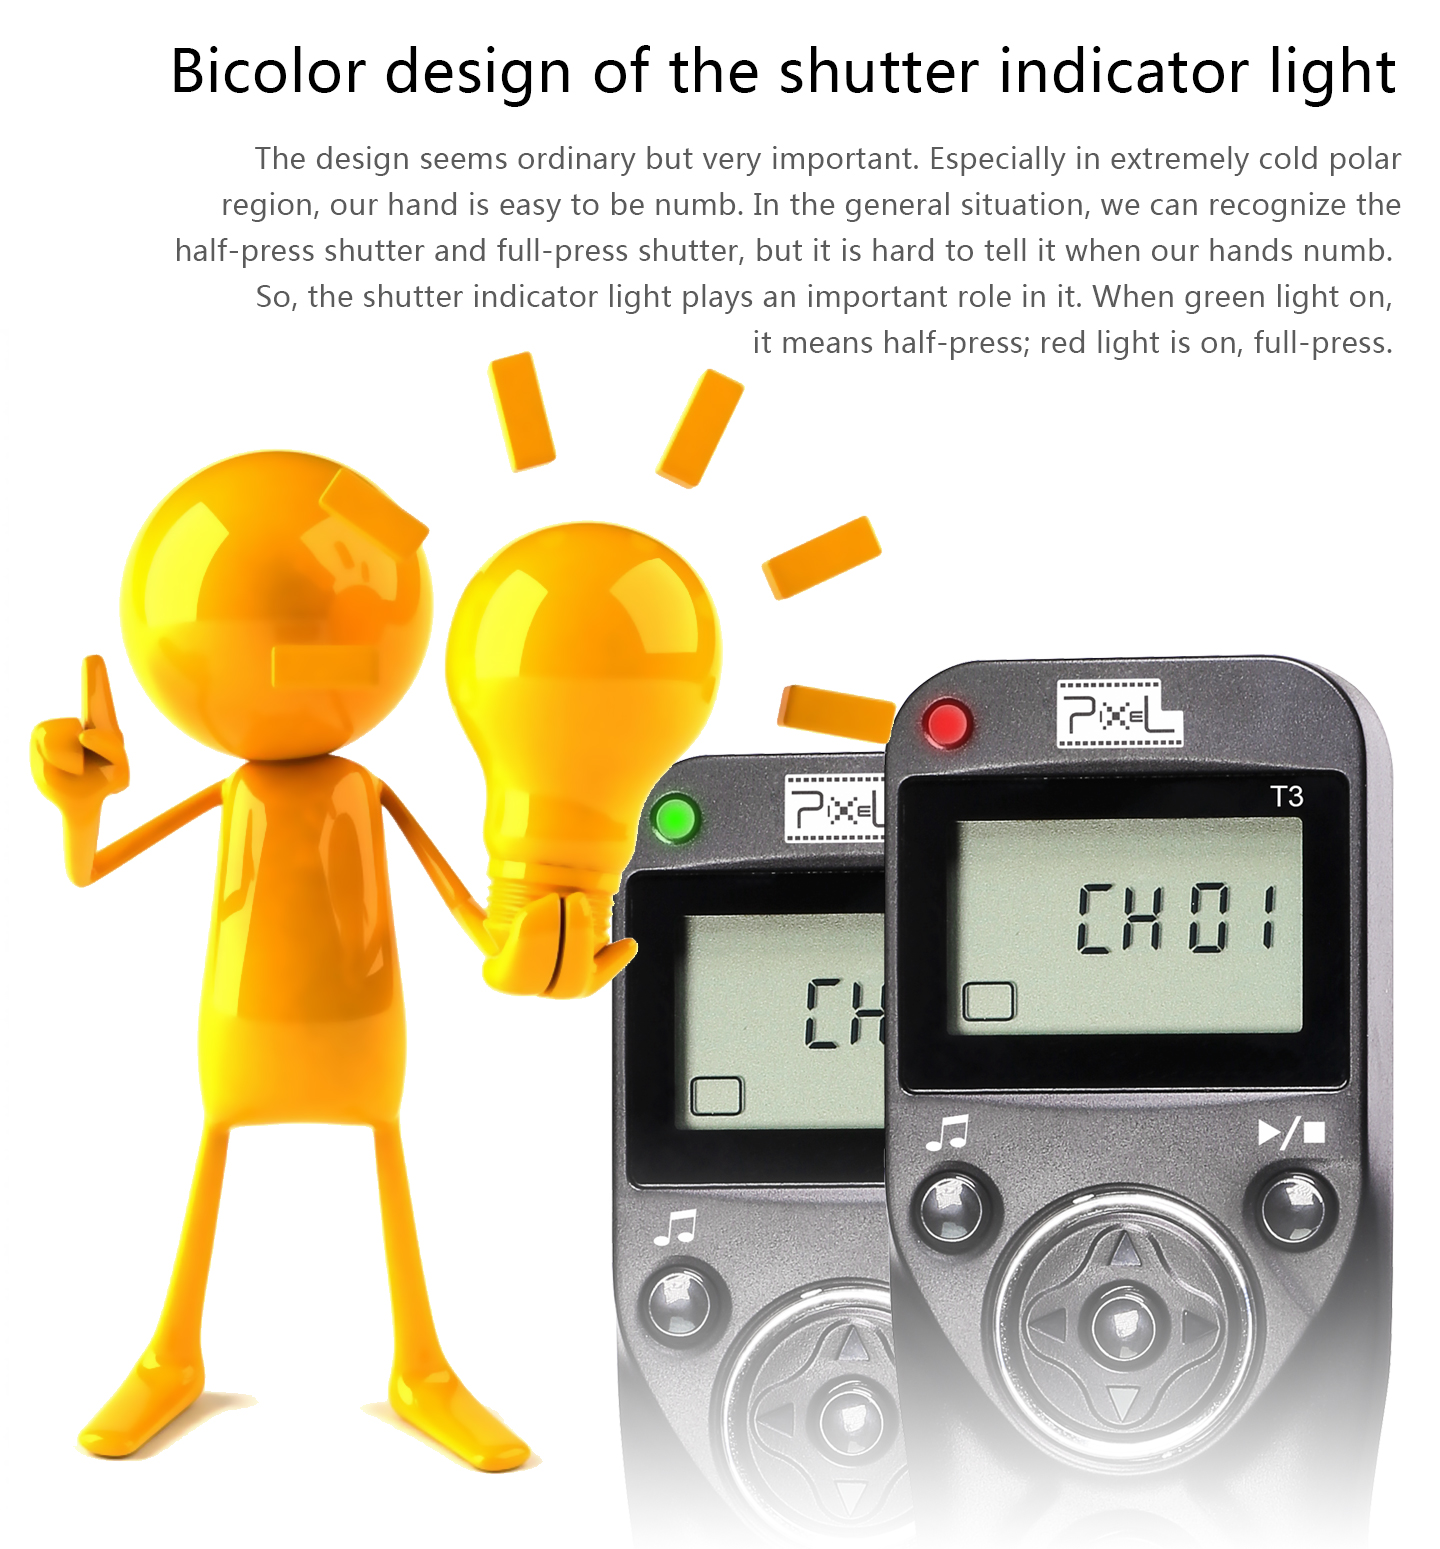 Bicolor design of the shutter indicator light